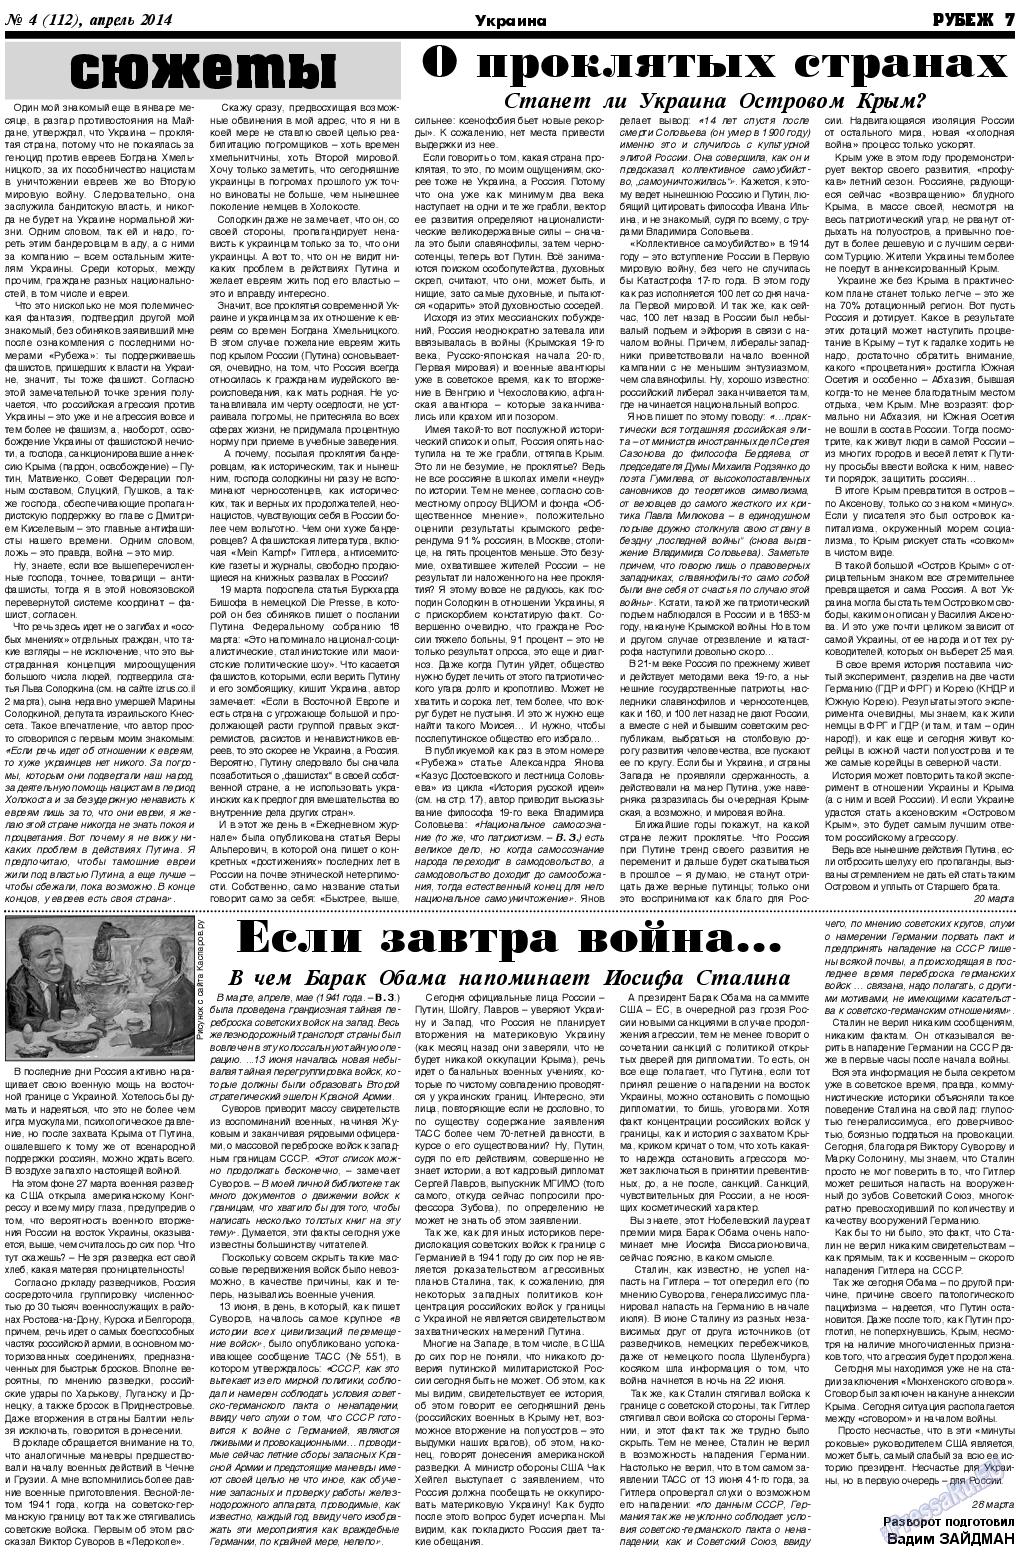 Рубеж, газета. 2014 №4 стр.7